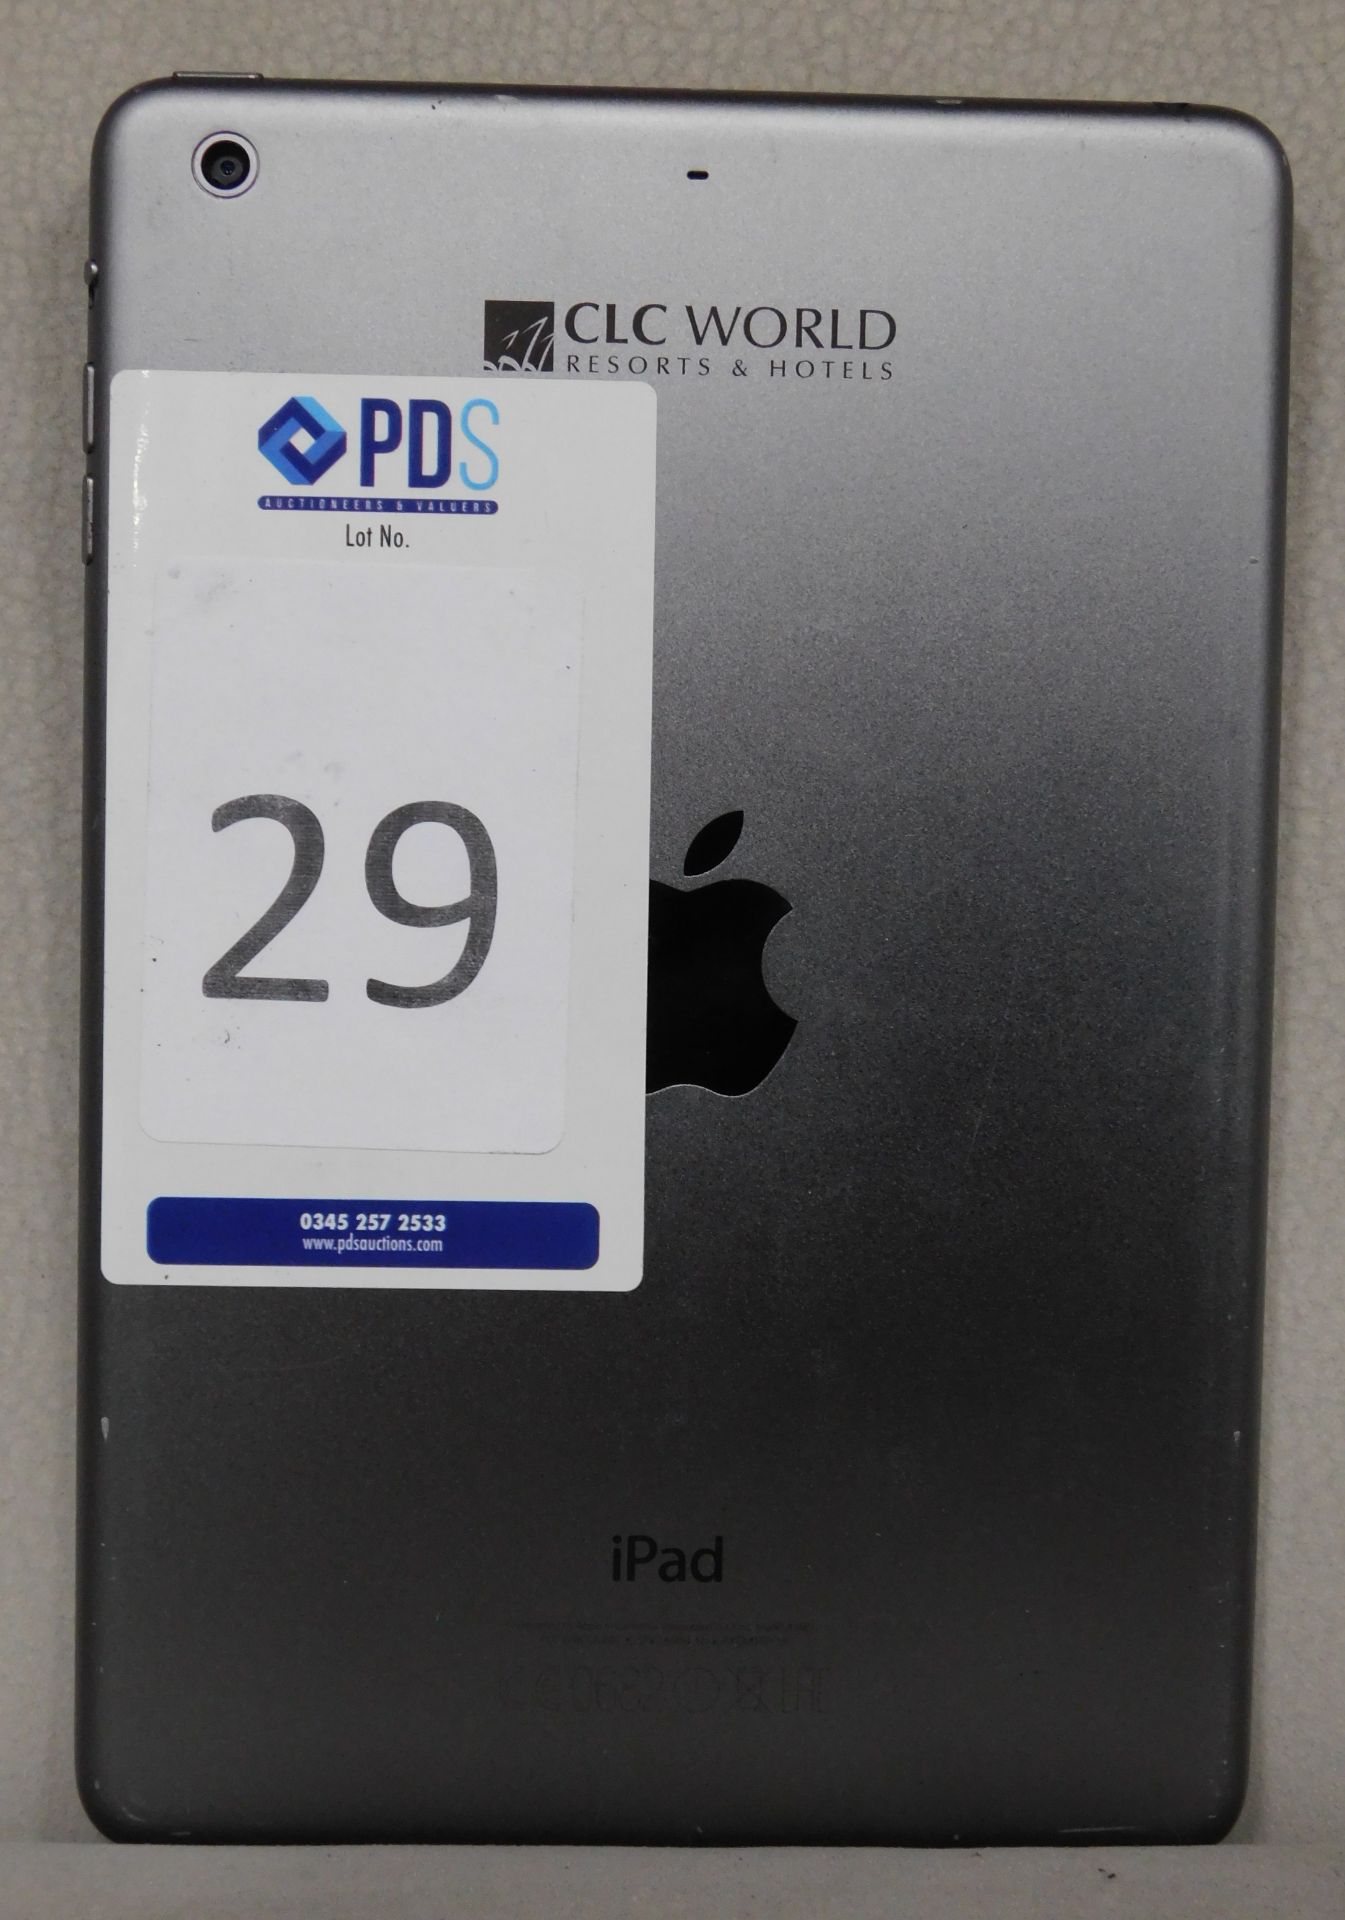 Apple iPad Mini 2 Retina WIFI 16GB Space Grey, Model Number: A1489, Serial Number: F9FQMEPKFCM5 ( - Image 2 of 2